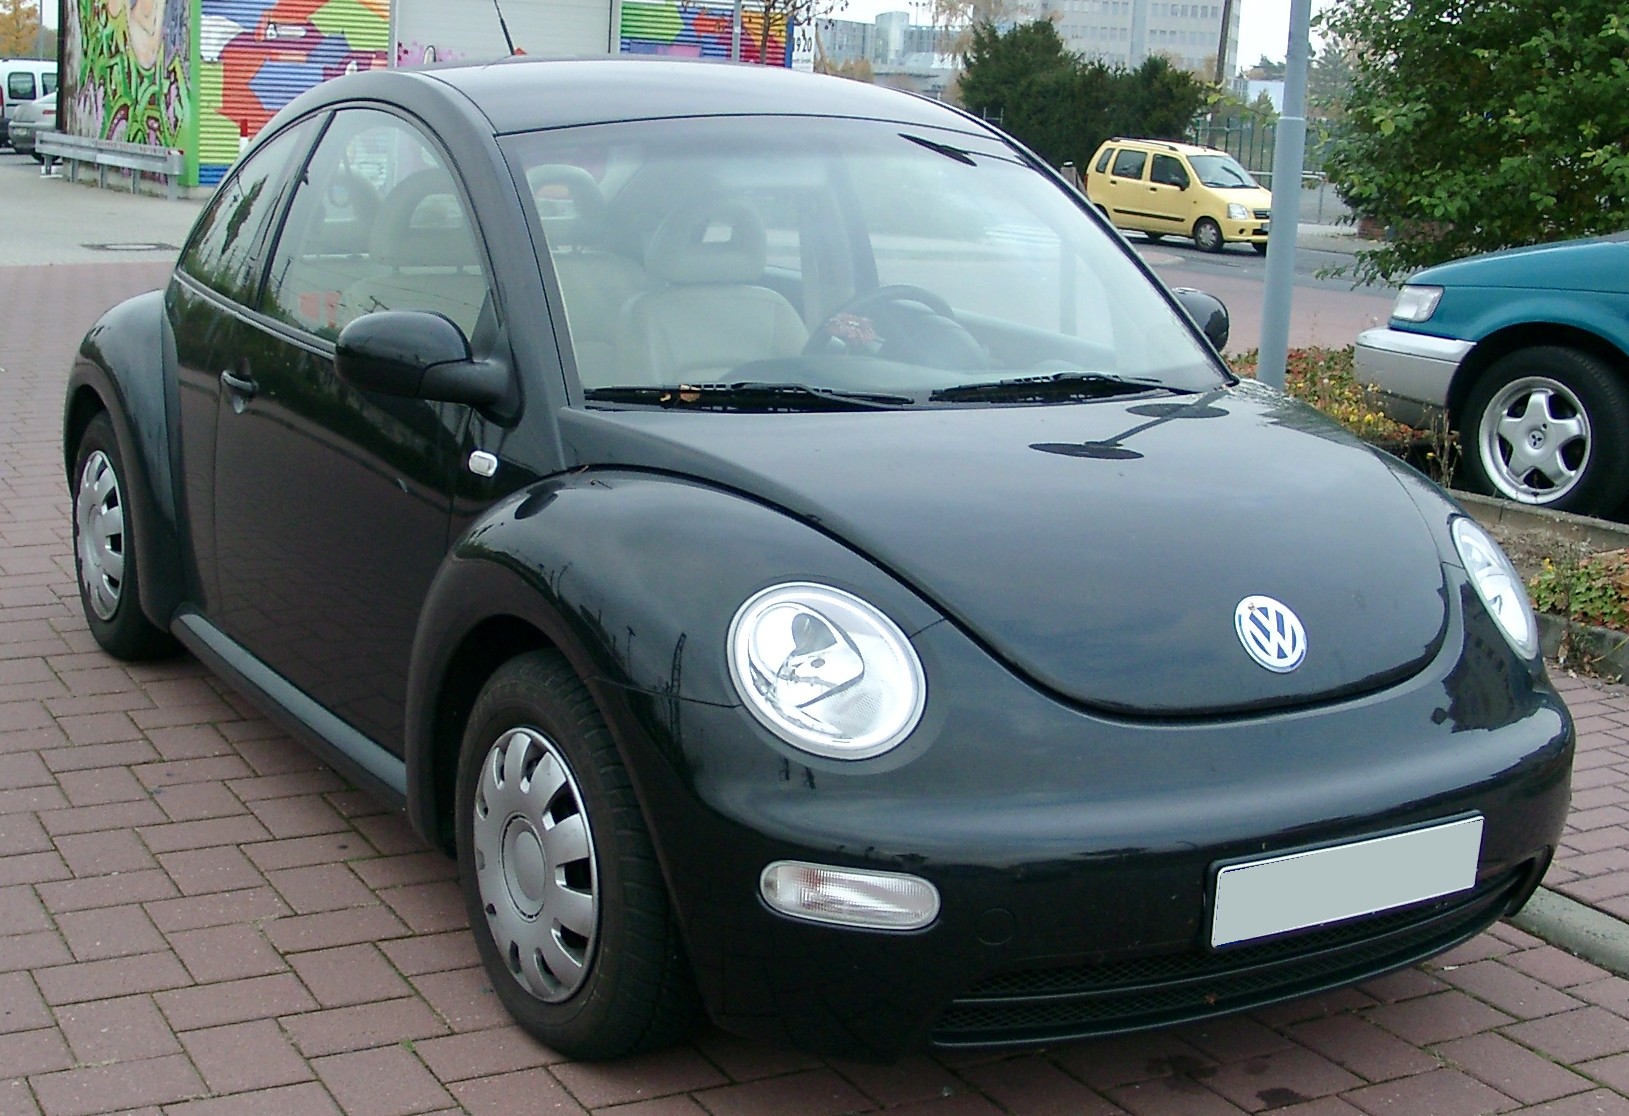 VW_New_Beetle_front_20071029.jpg